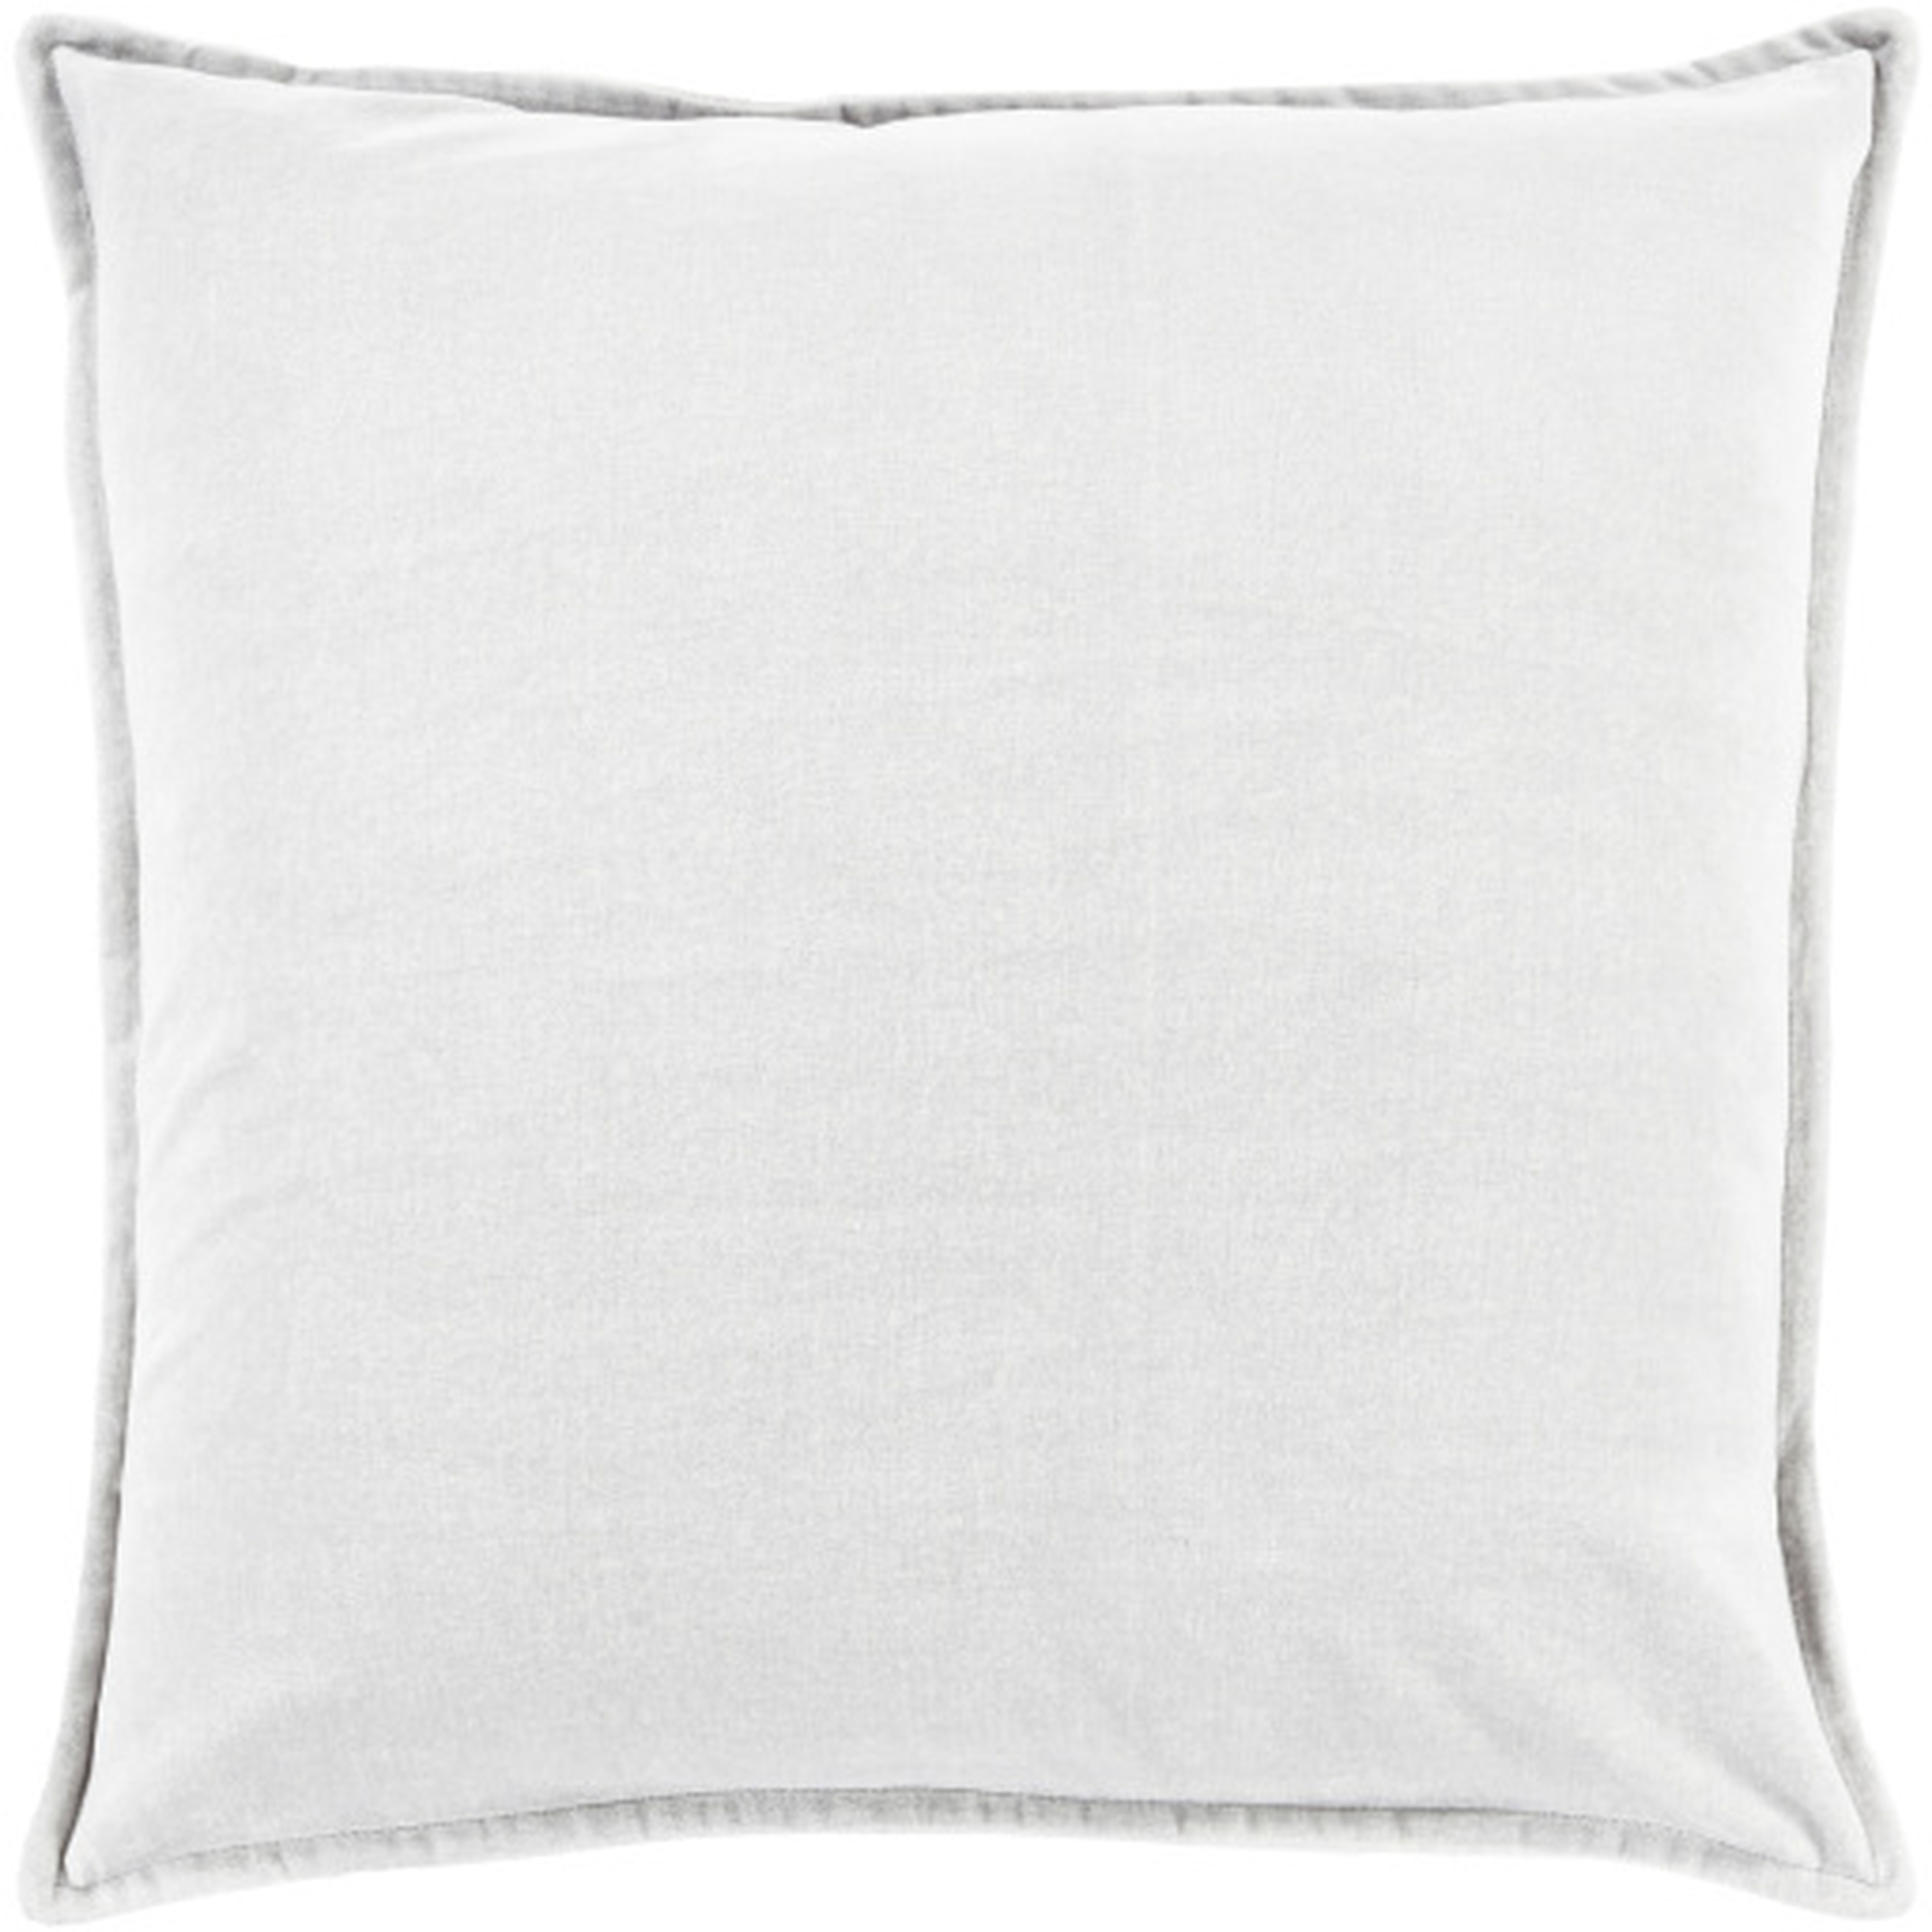 Cotton Velvet Pillow, 18" x 18", Gray - Surya